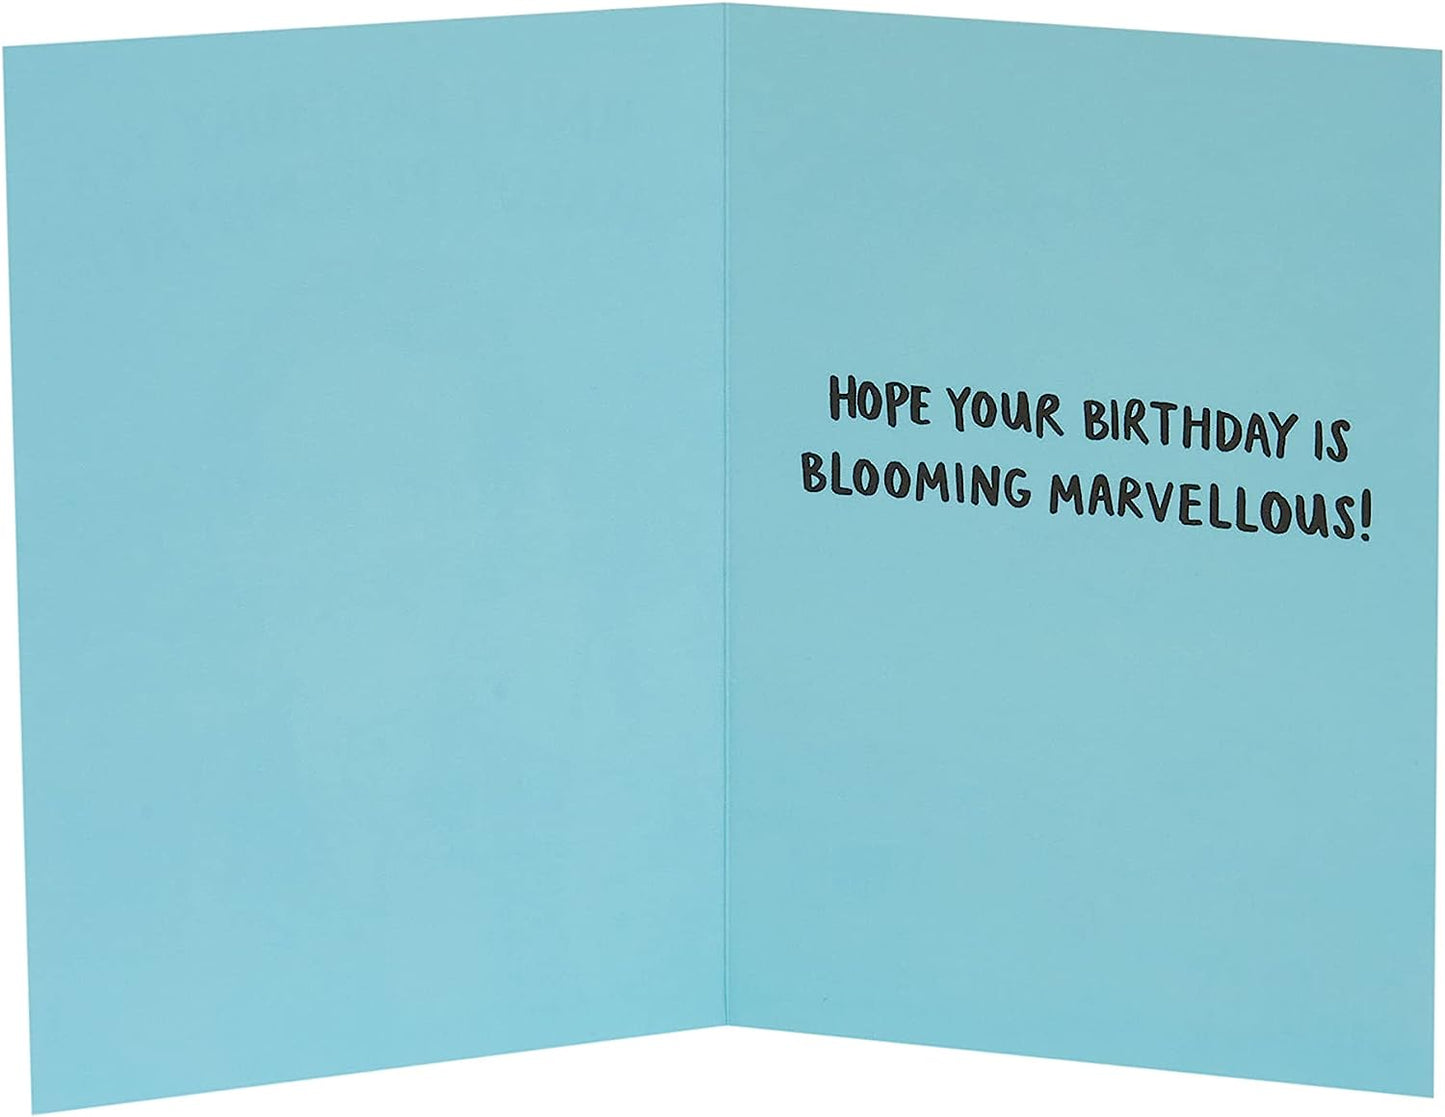 Monty Don Design Birthday Card